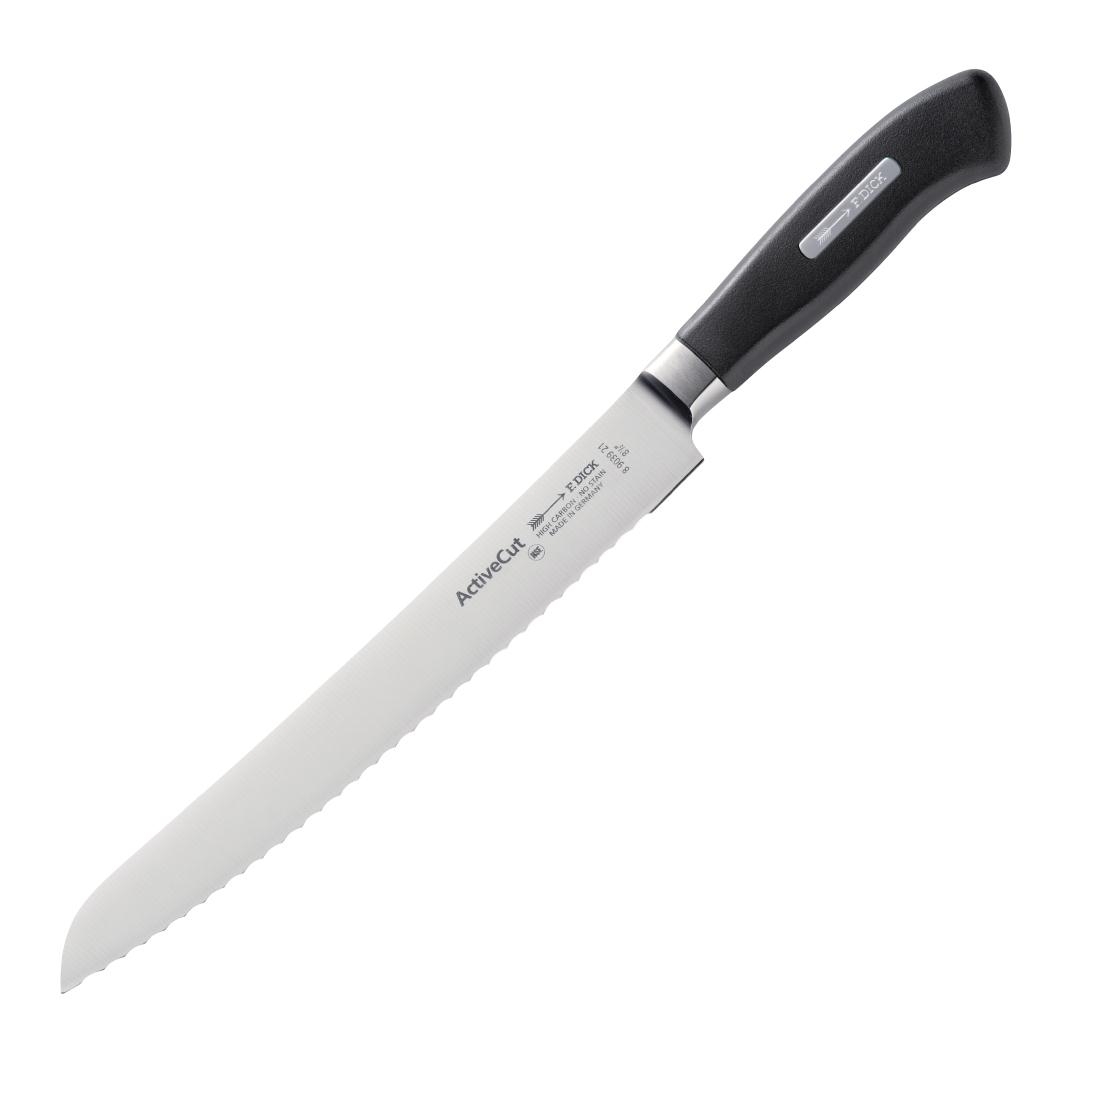 Dick Active Cut Serrated Bread Knife 21cm